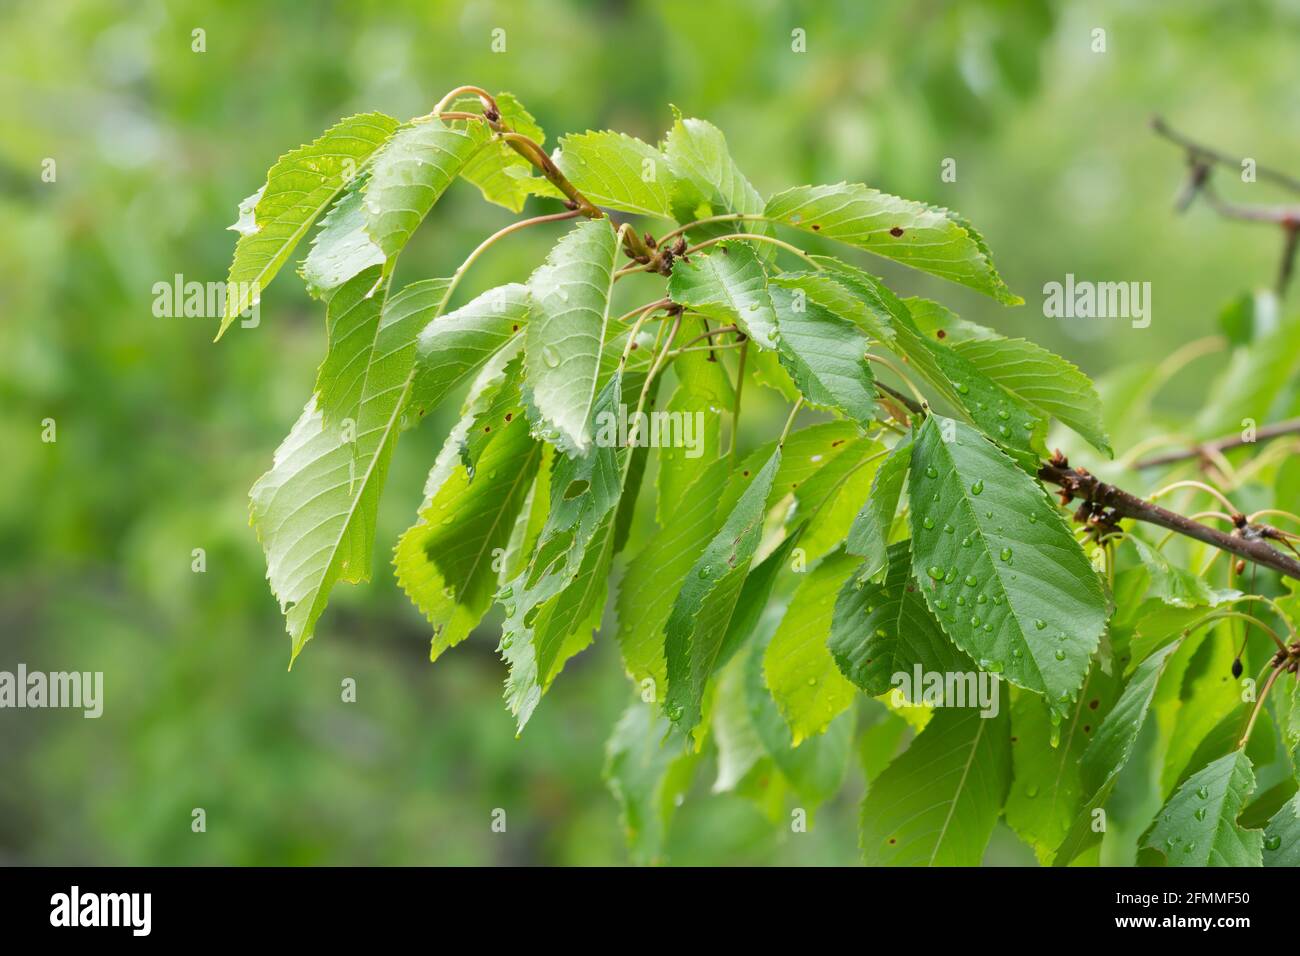 Sweet cherry, Prunus avium twig with leaves Stock Photo